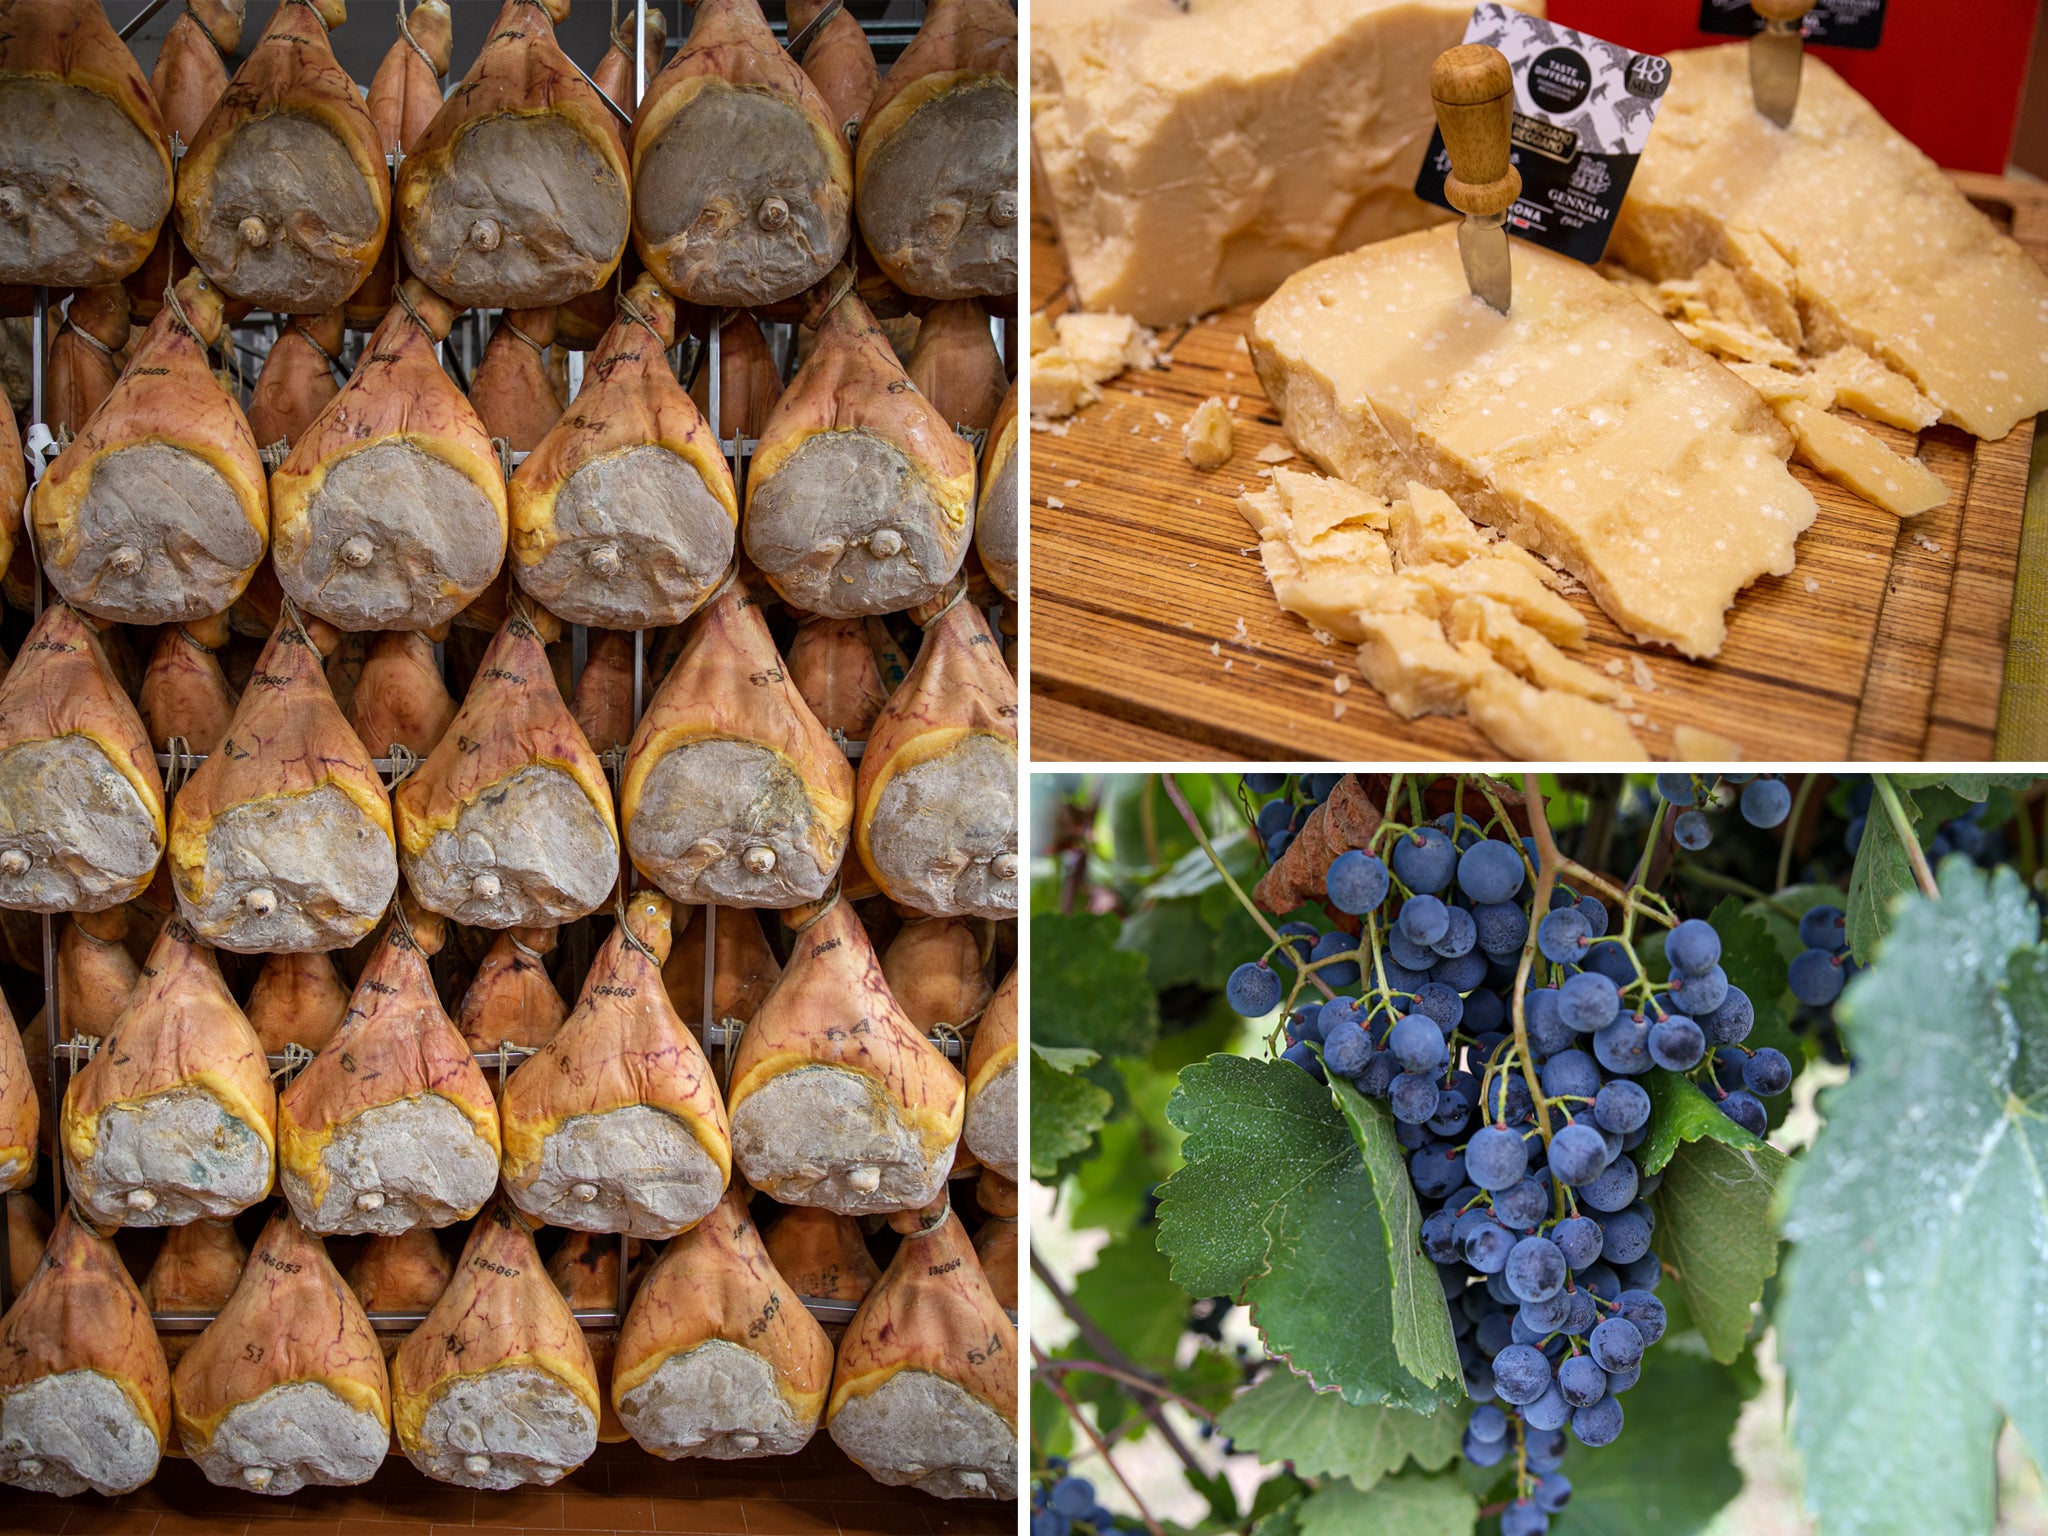 Clockwise from left: Prosciutto hams, Parmigiano Reggiano and Lambrusco grapes from Emilia-Romagna